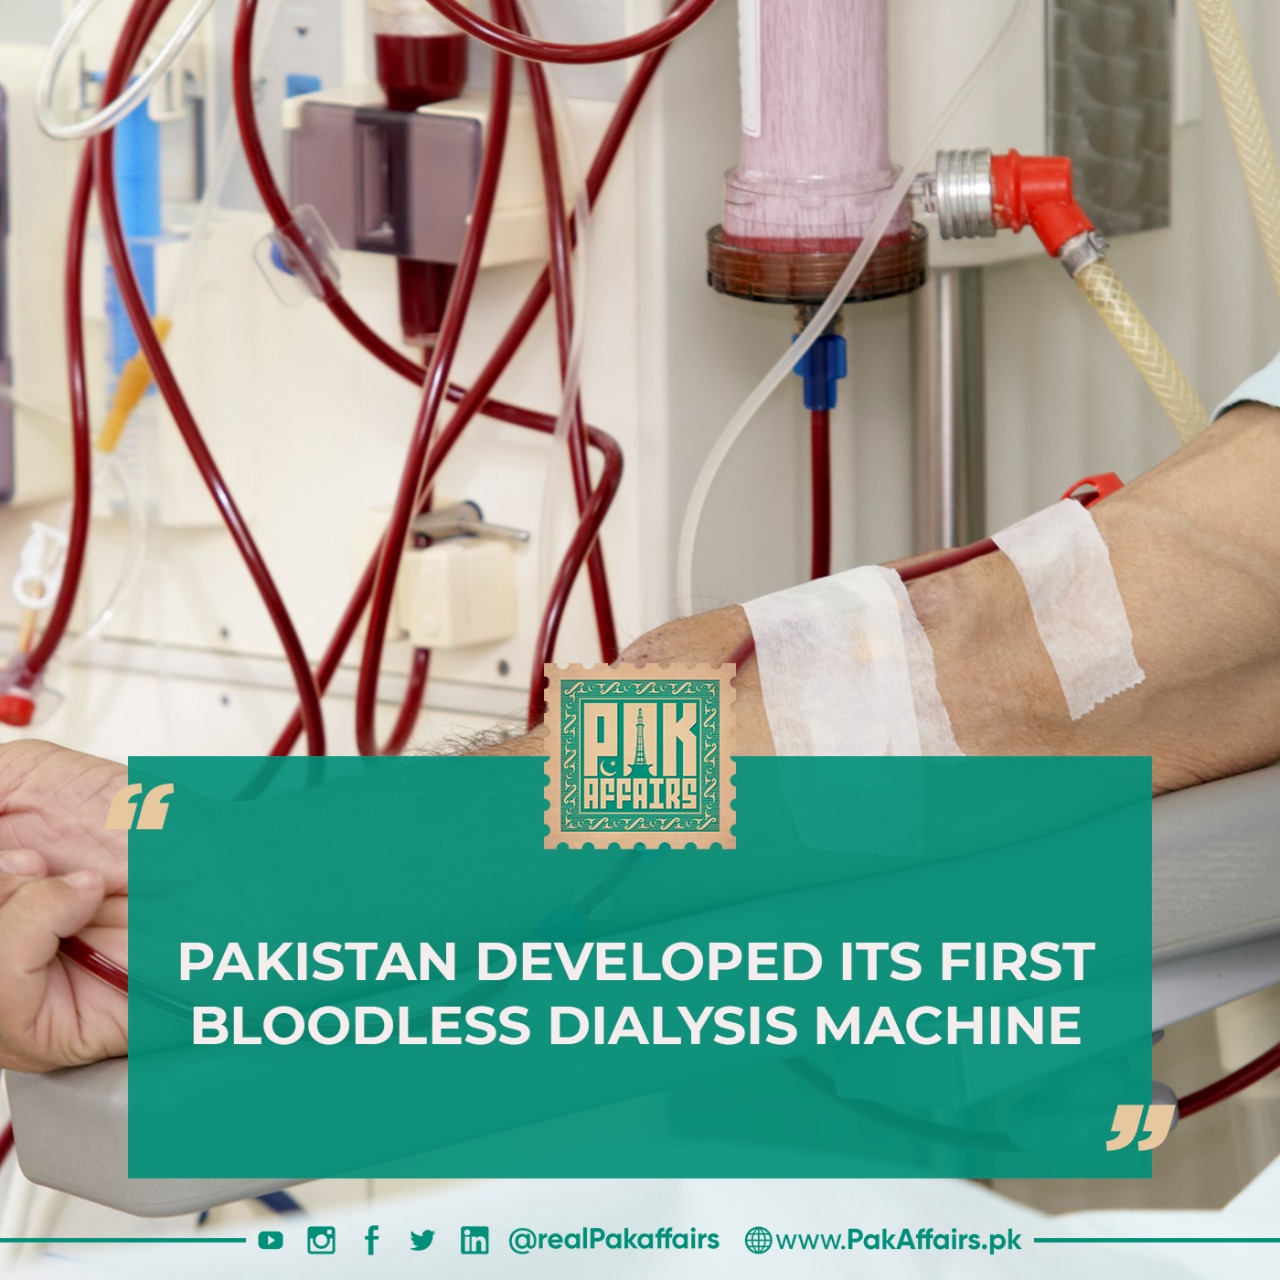 Pakistan developed its first bloodless dialysis machine